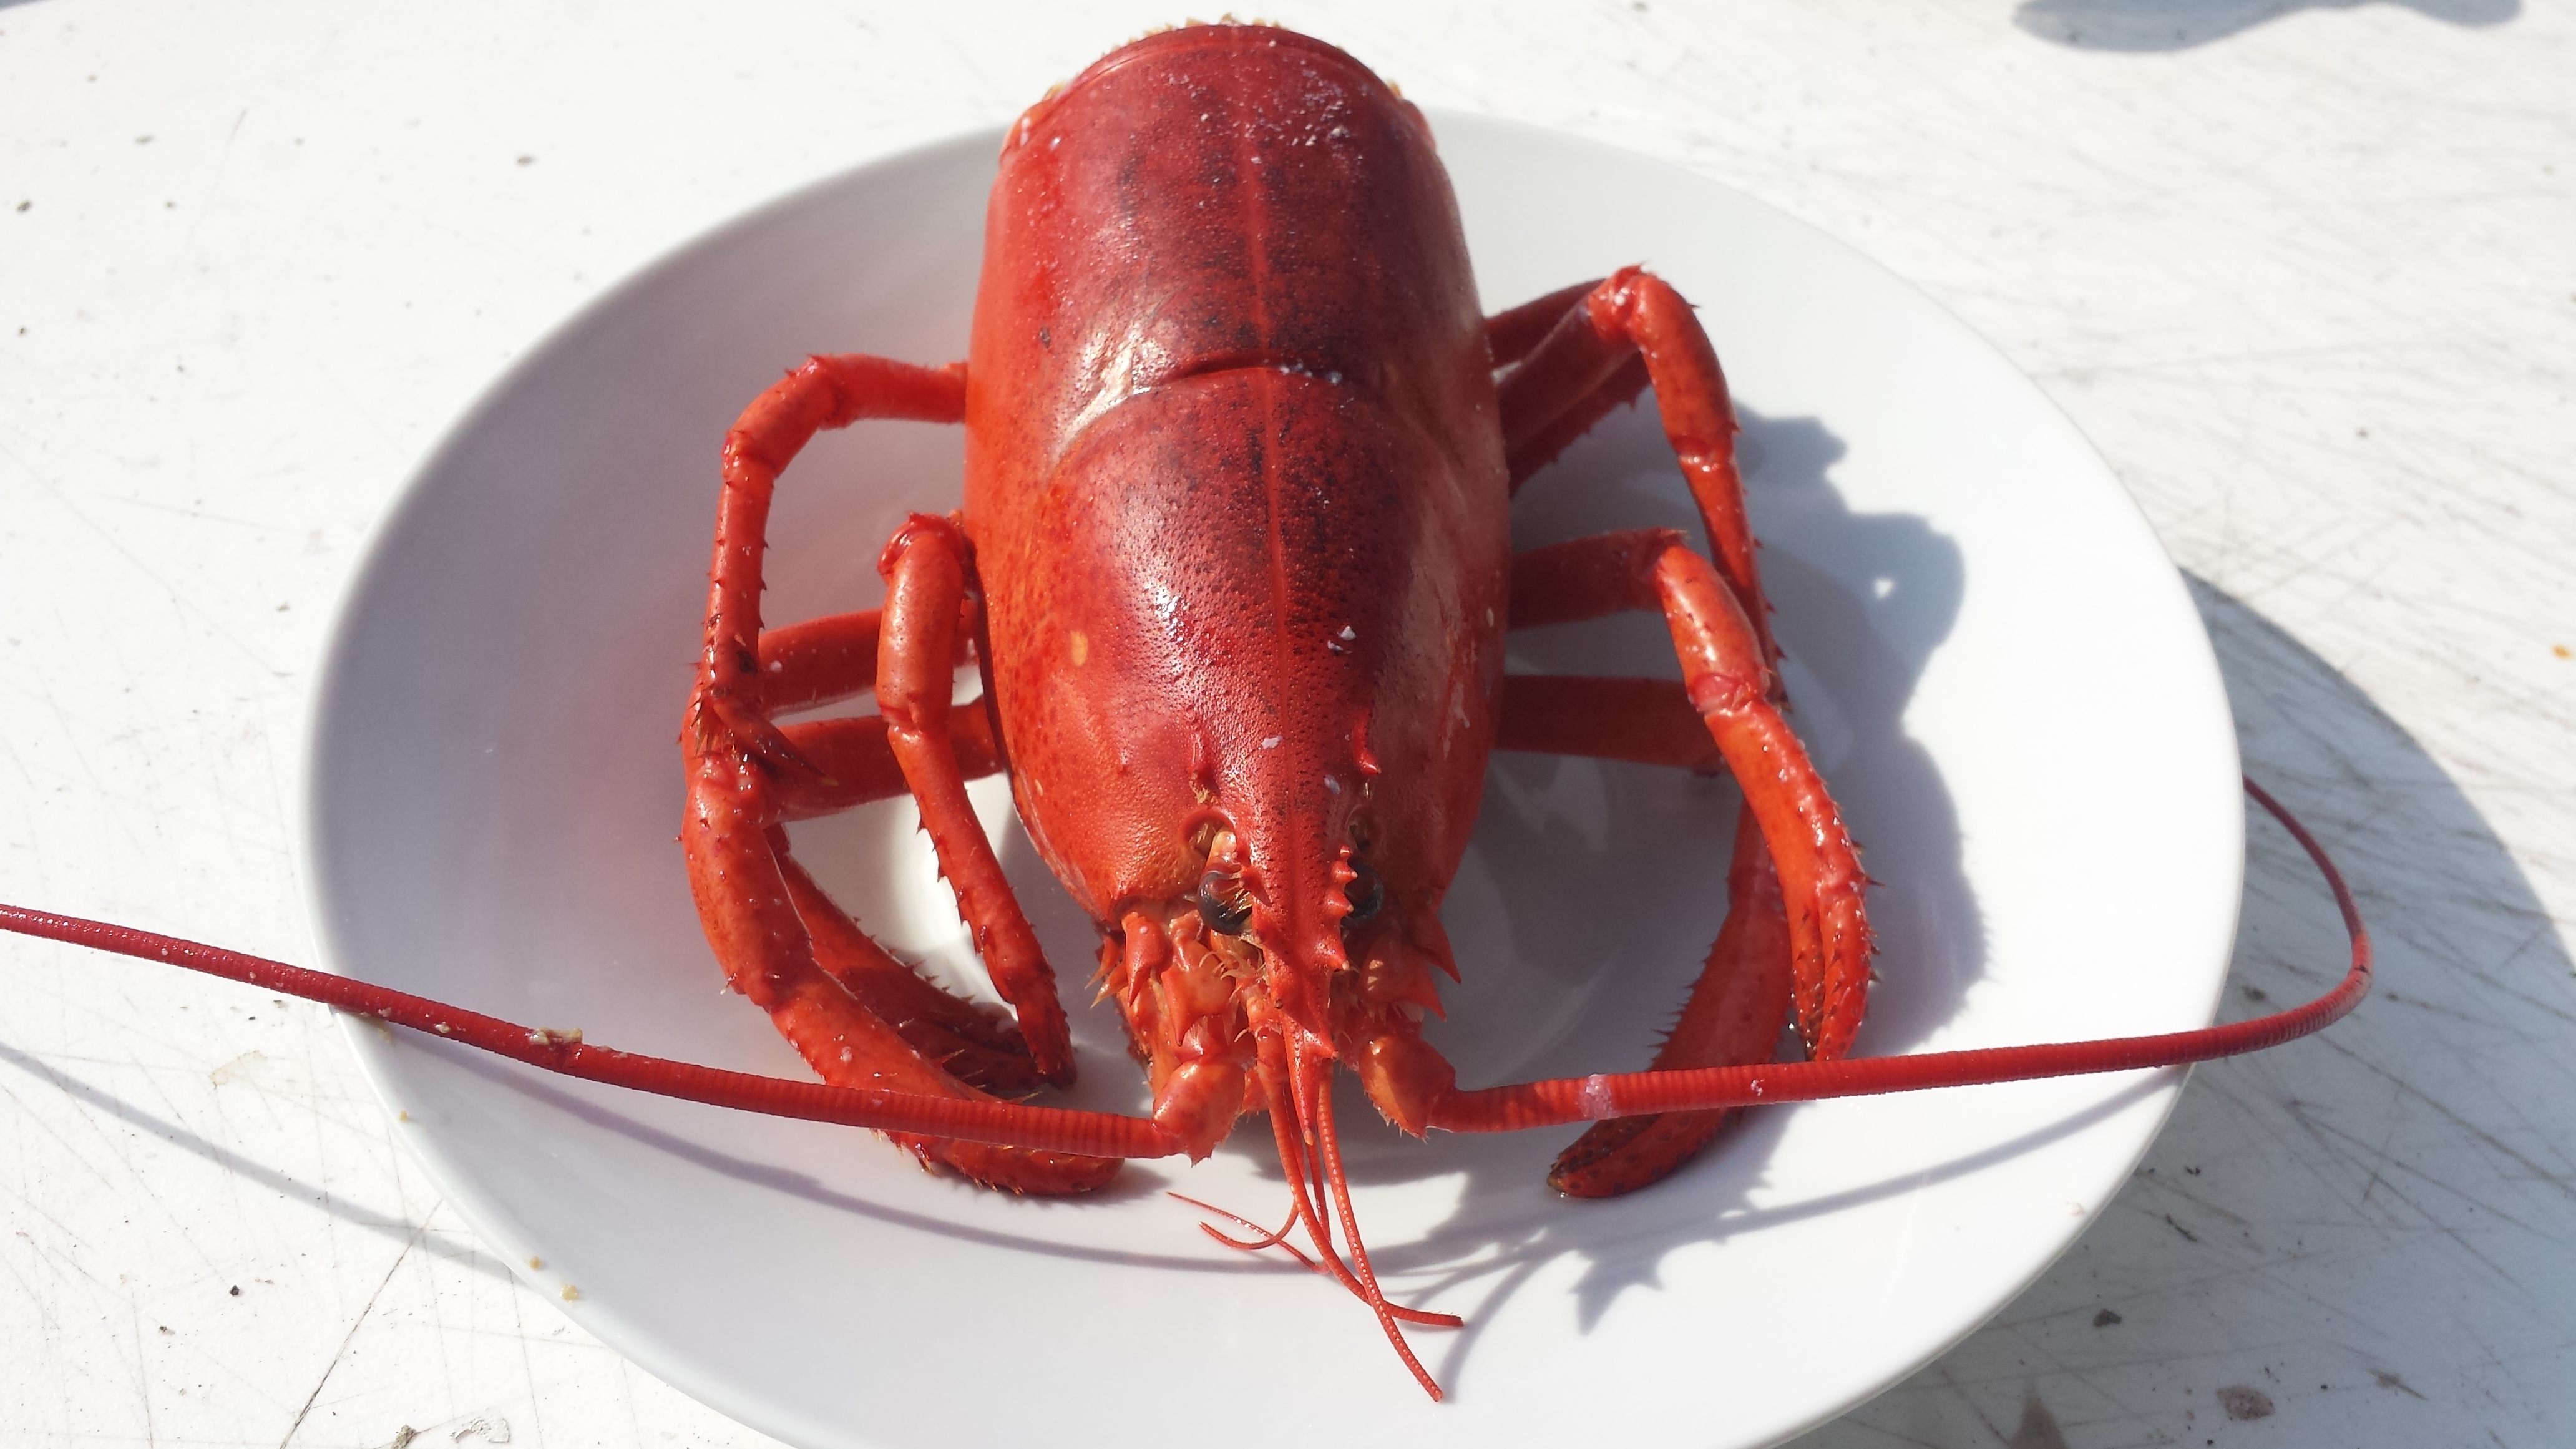 Lobster head